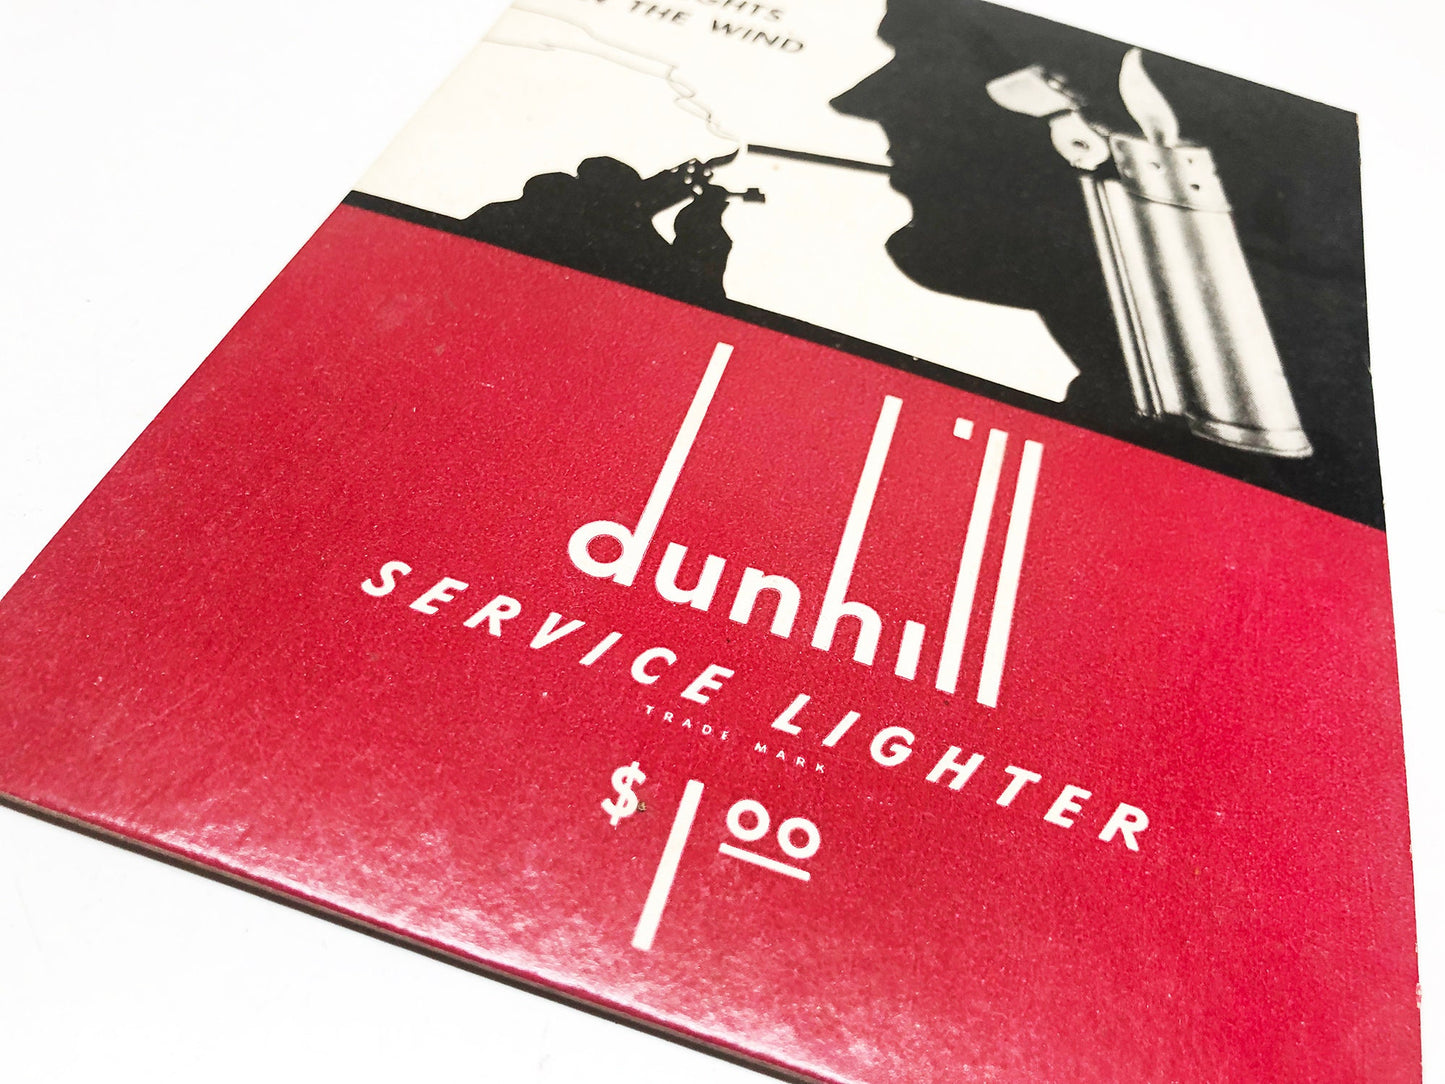 Original Dunhill Service Lighter Box and Countertop Sign